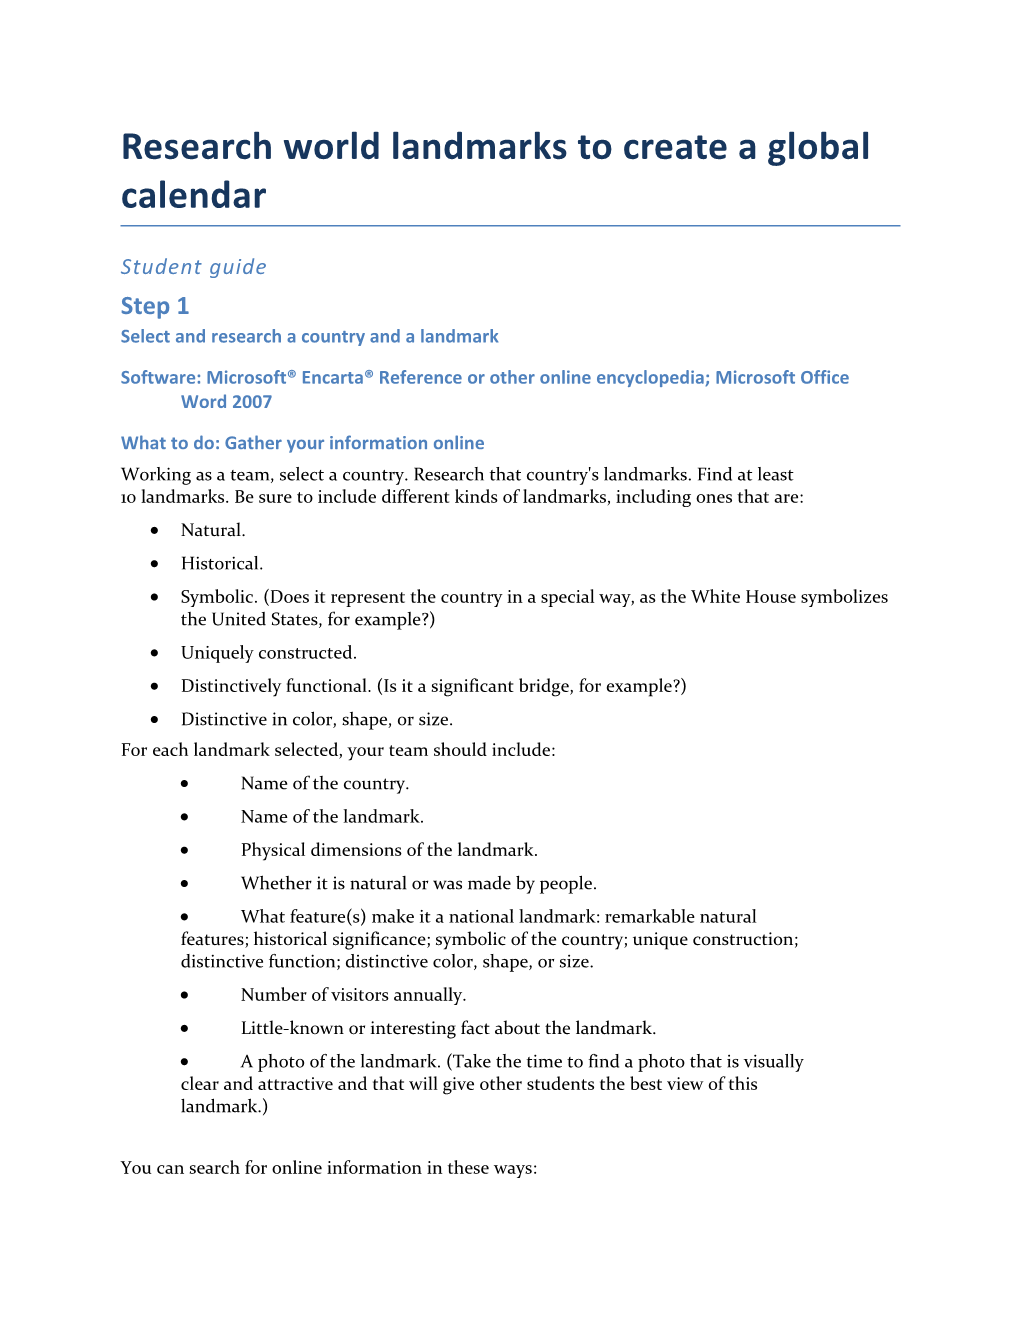 Research Worldlandmarks to Create a Global Calendar